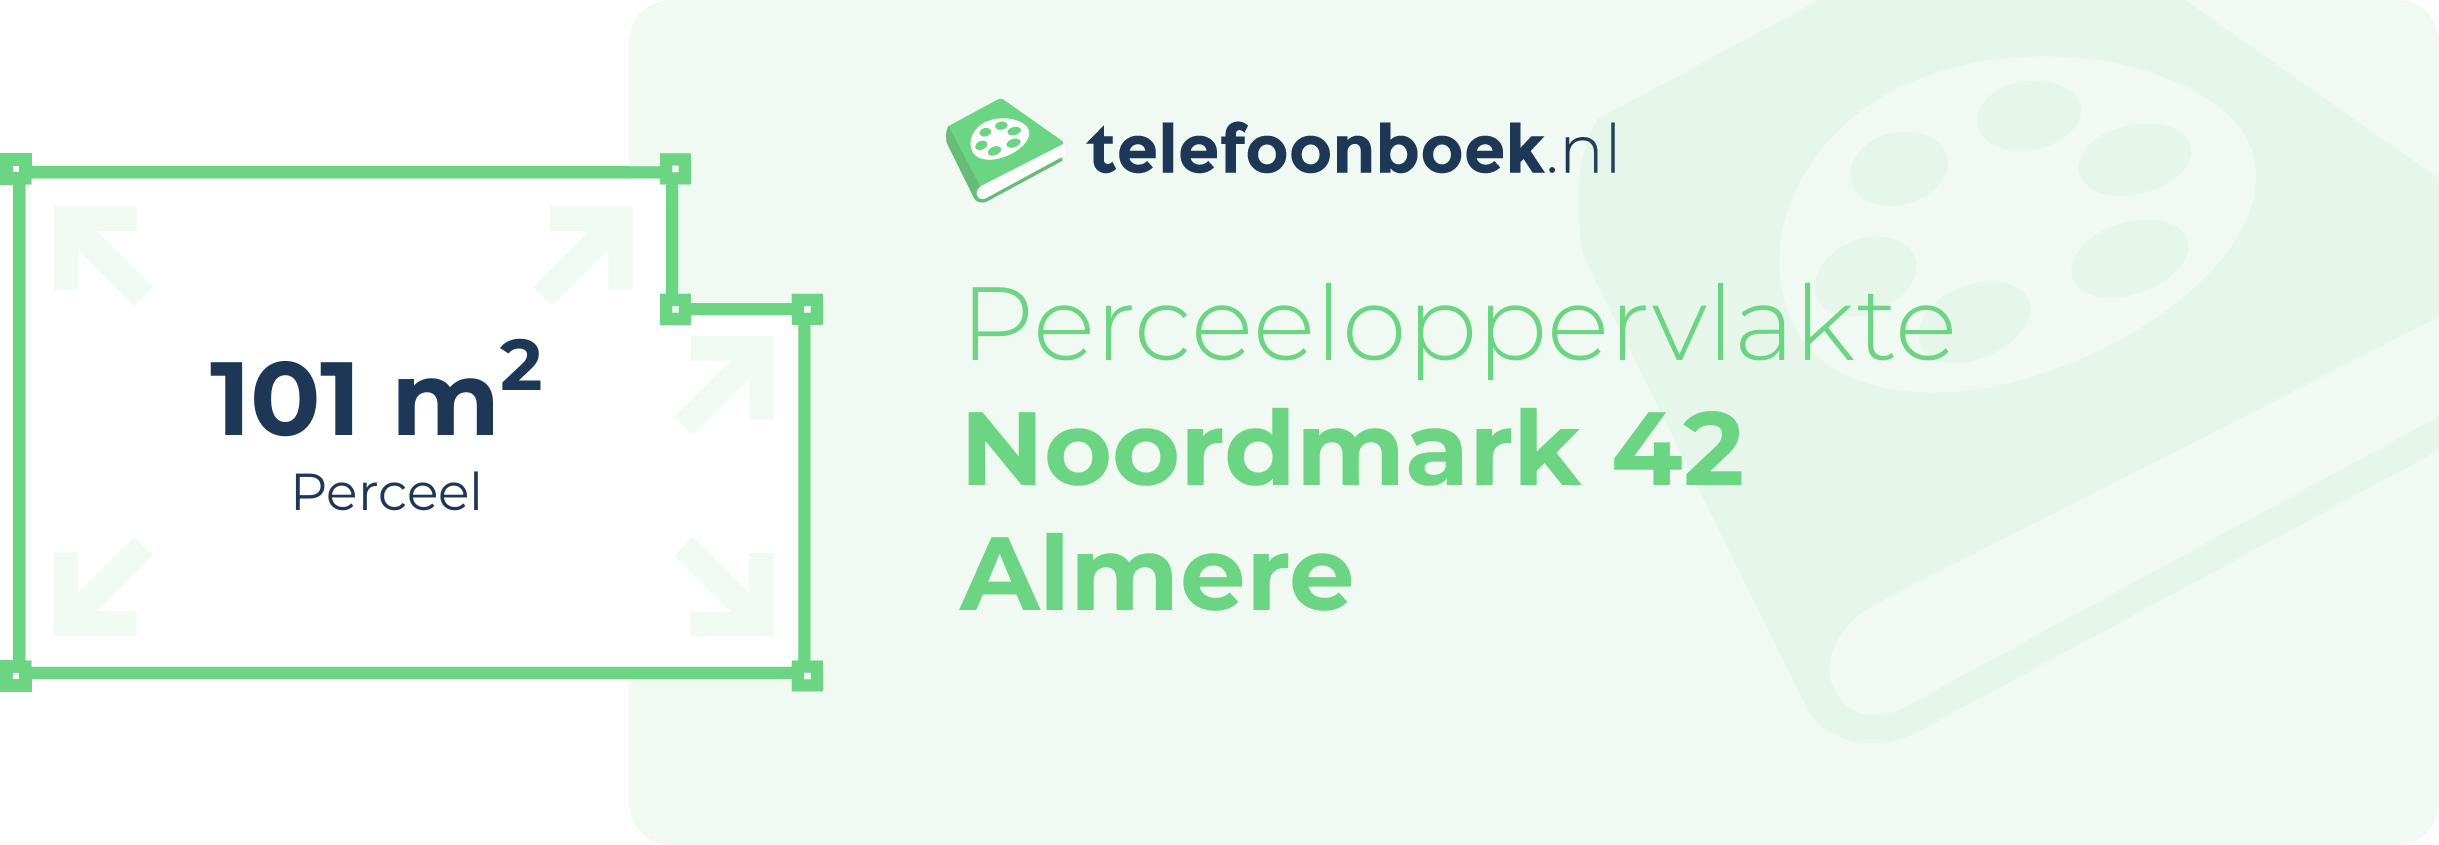 Perceeloppervlakte Noordmark 42 Almere